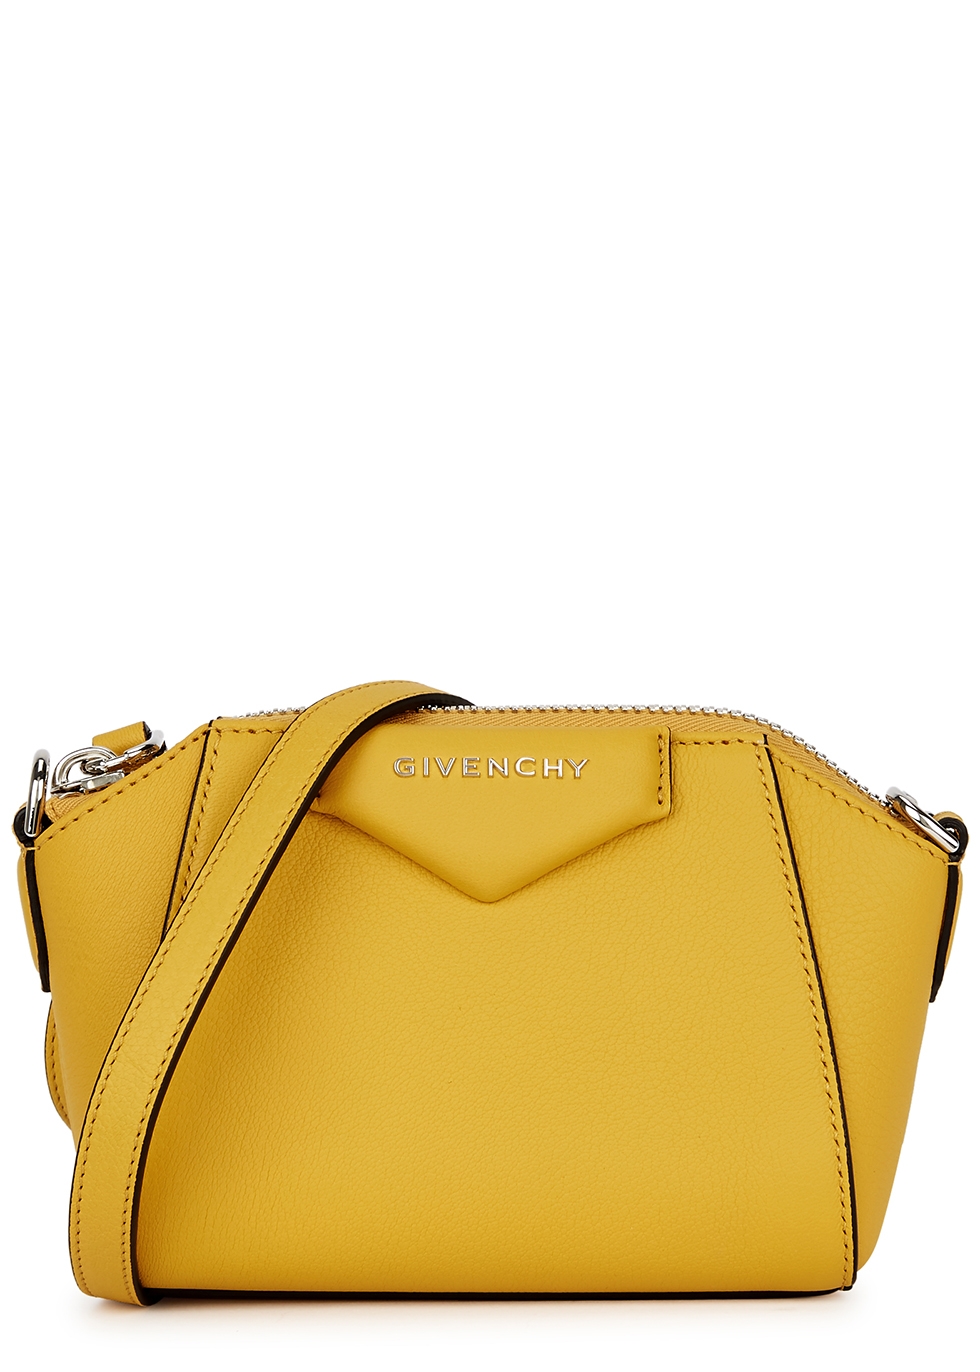 Antigona nano mustard leather cross-body bag